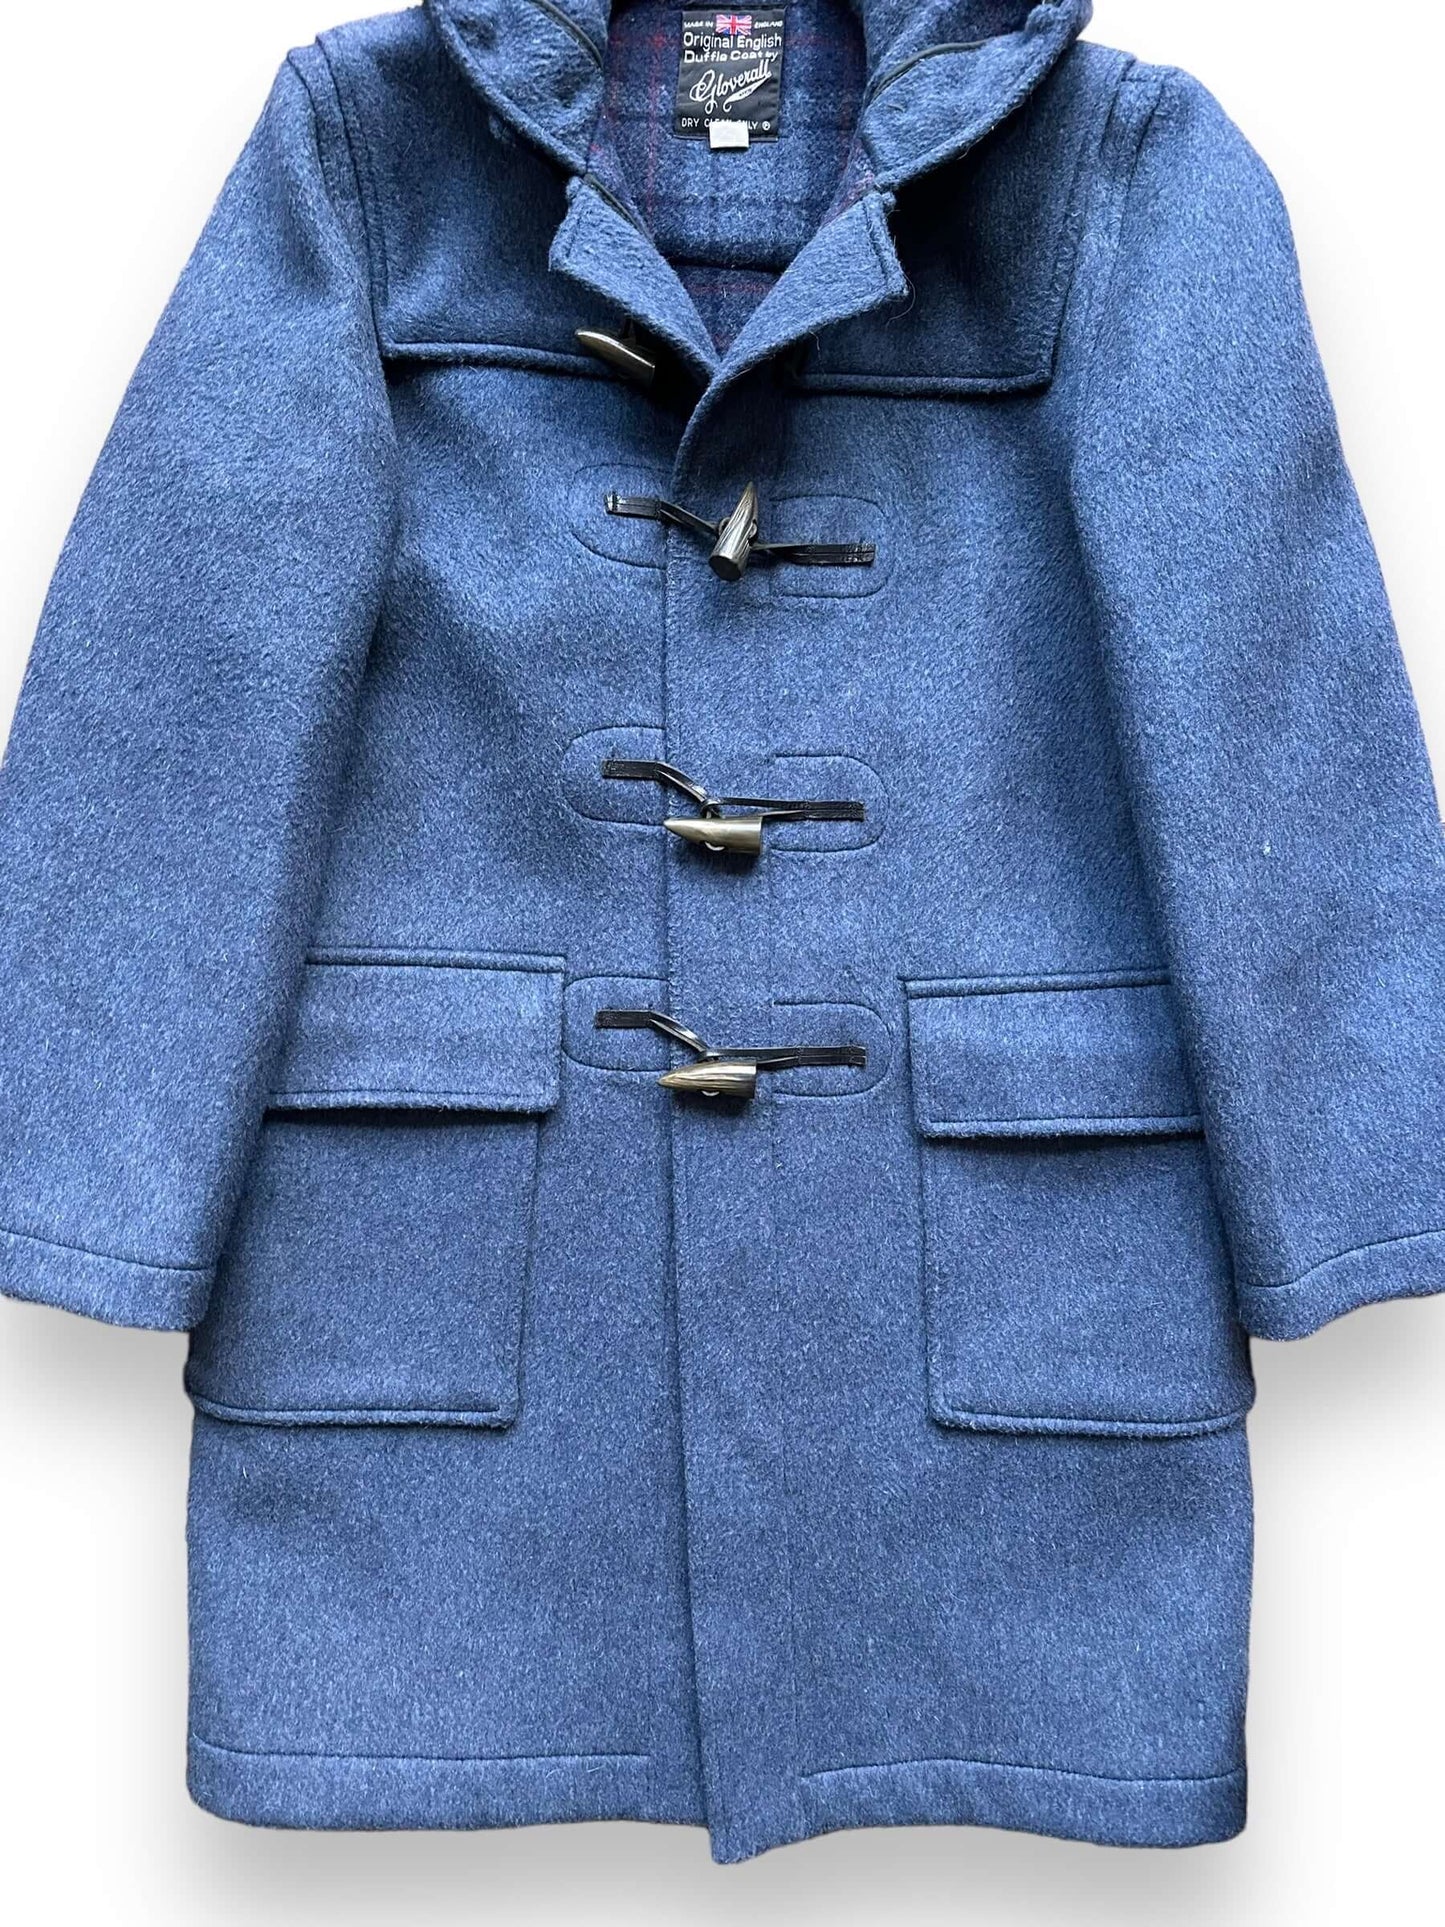 Front Detail of Vintage Gloverall Duffle Coat SZ L | Seattle Vintage Wool Coat | Barn Owl Vintage Seattle